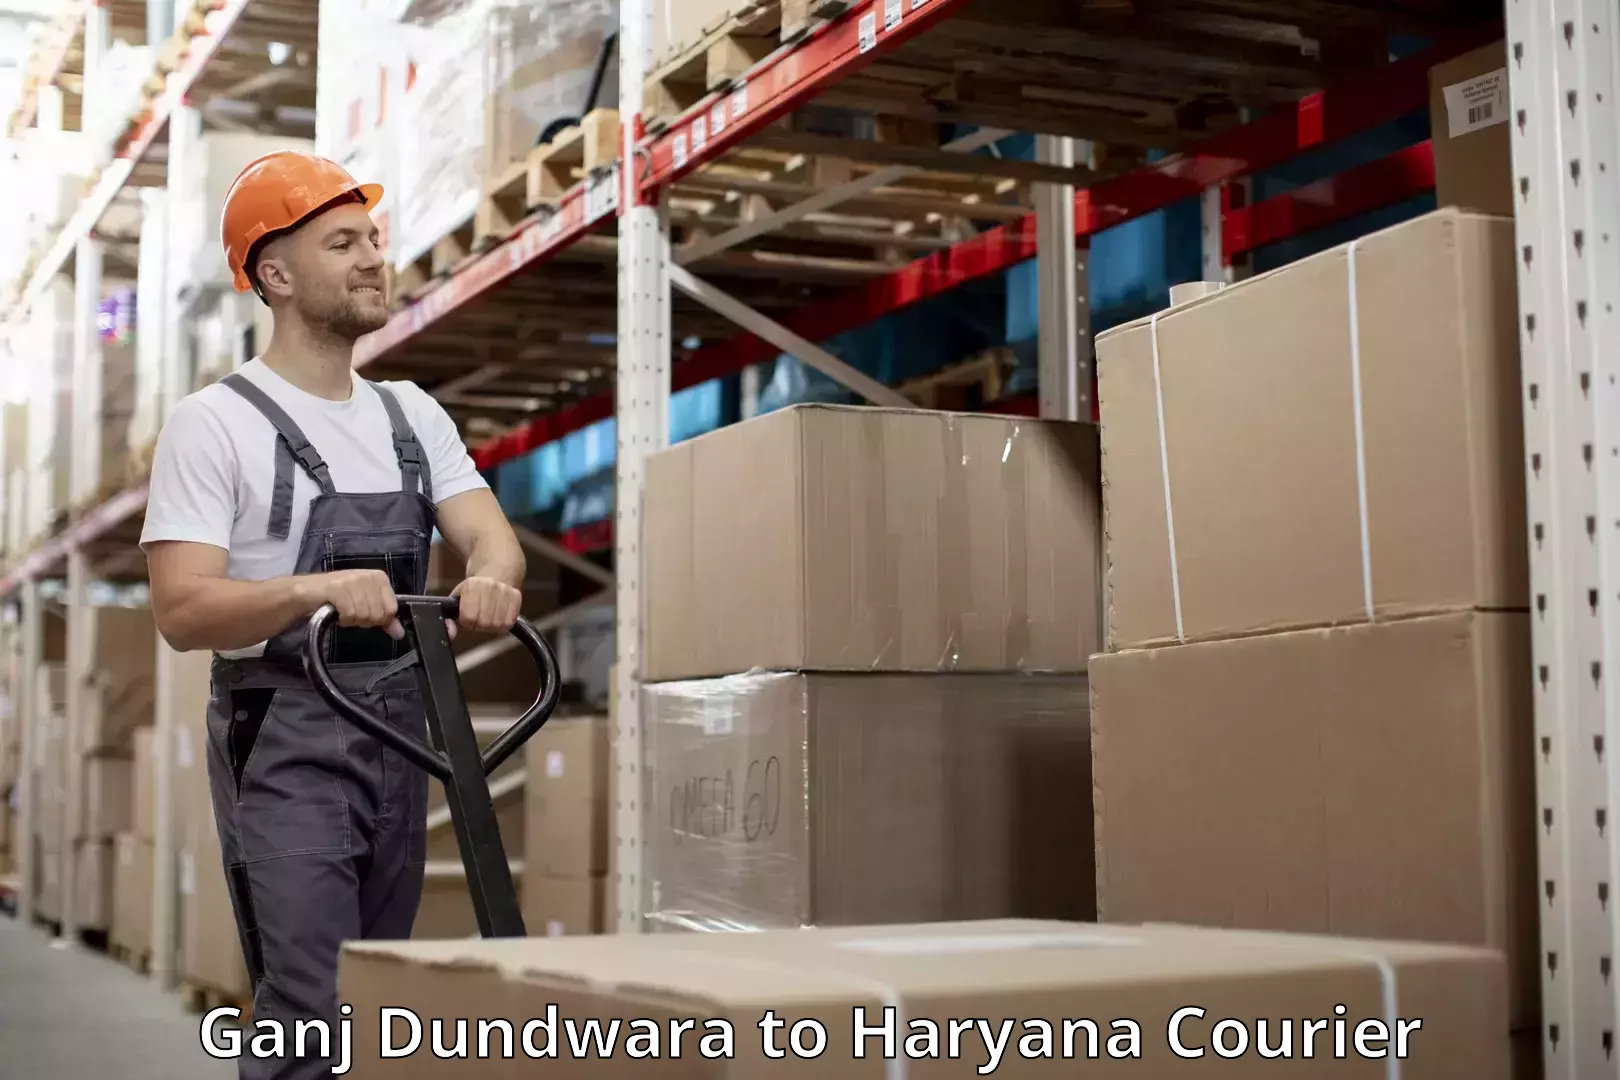 Luggage delivery providers Ganj Dundwara to Haryana